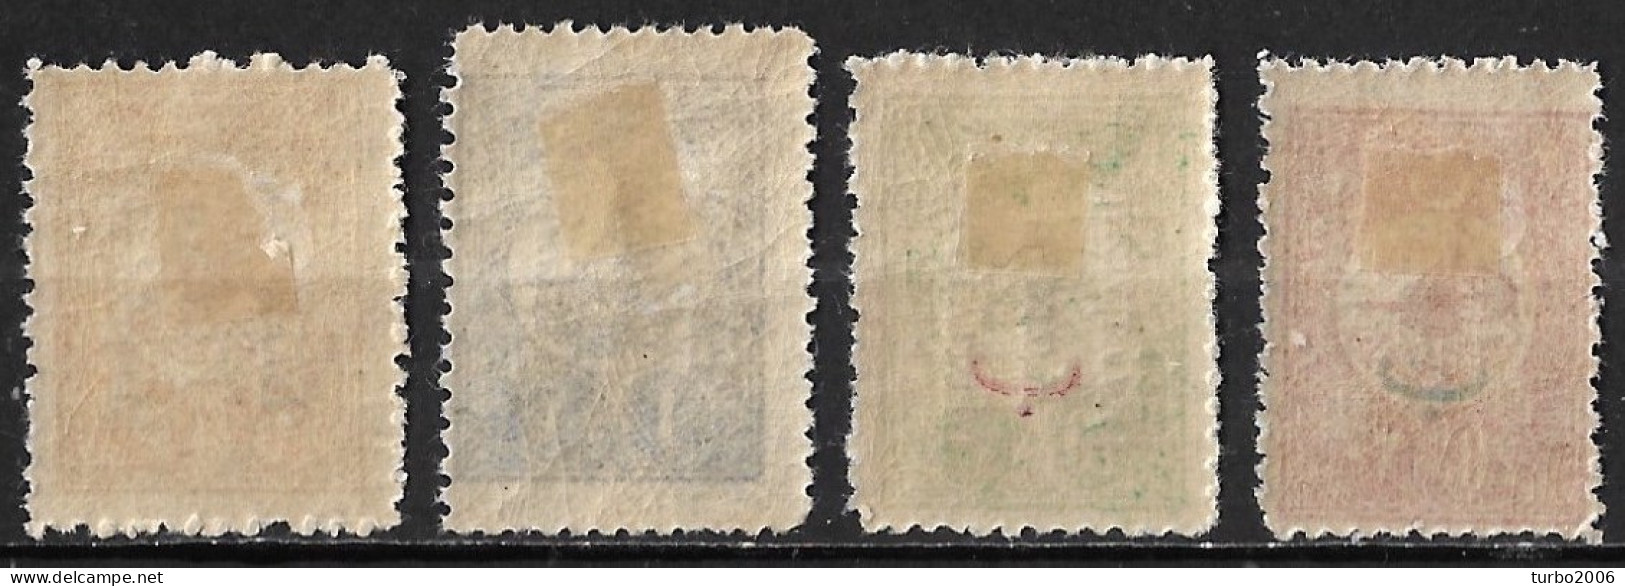 MYTILENE 1912 Overprinted Turkish Stamps 4 Values Vl.  2-5-10-11 MH - Mytilena